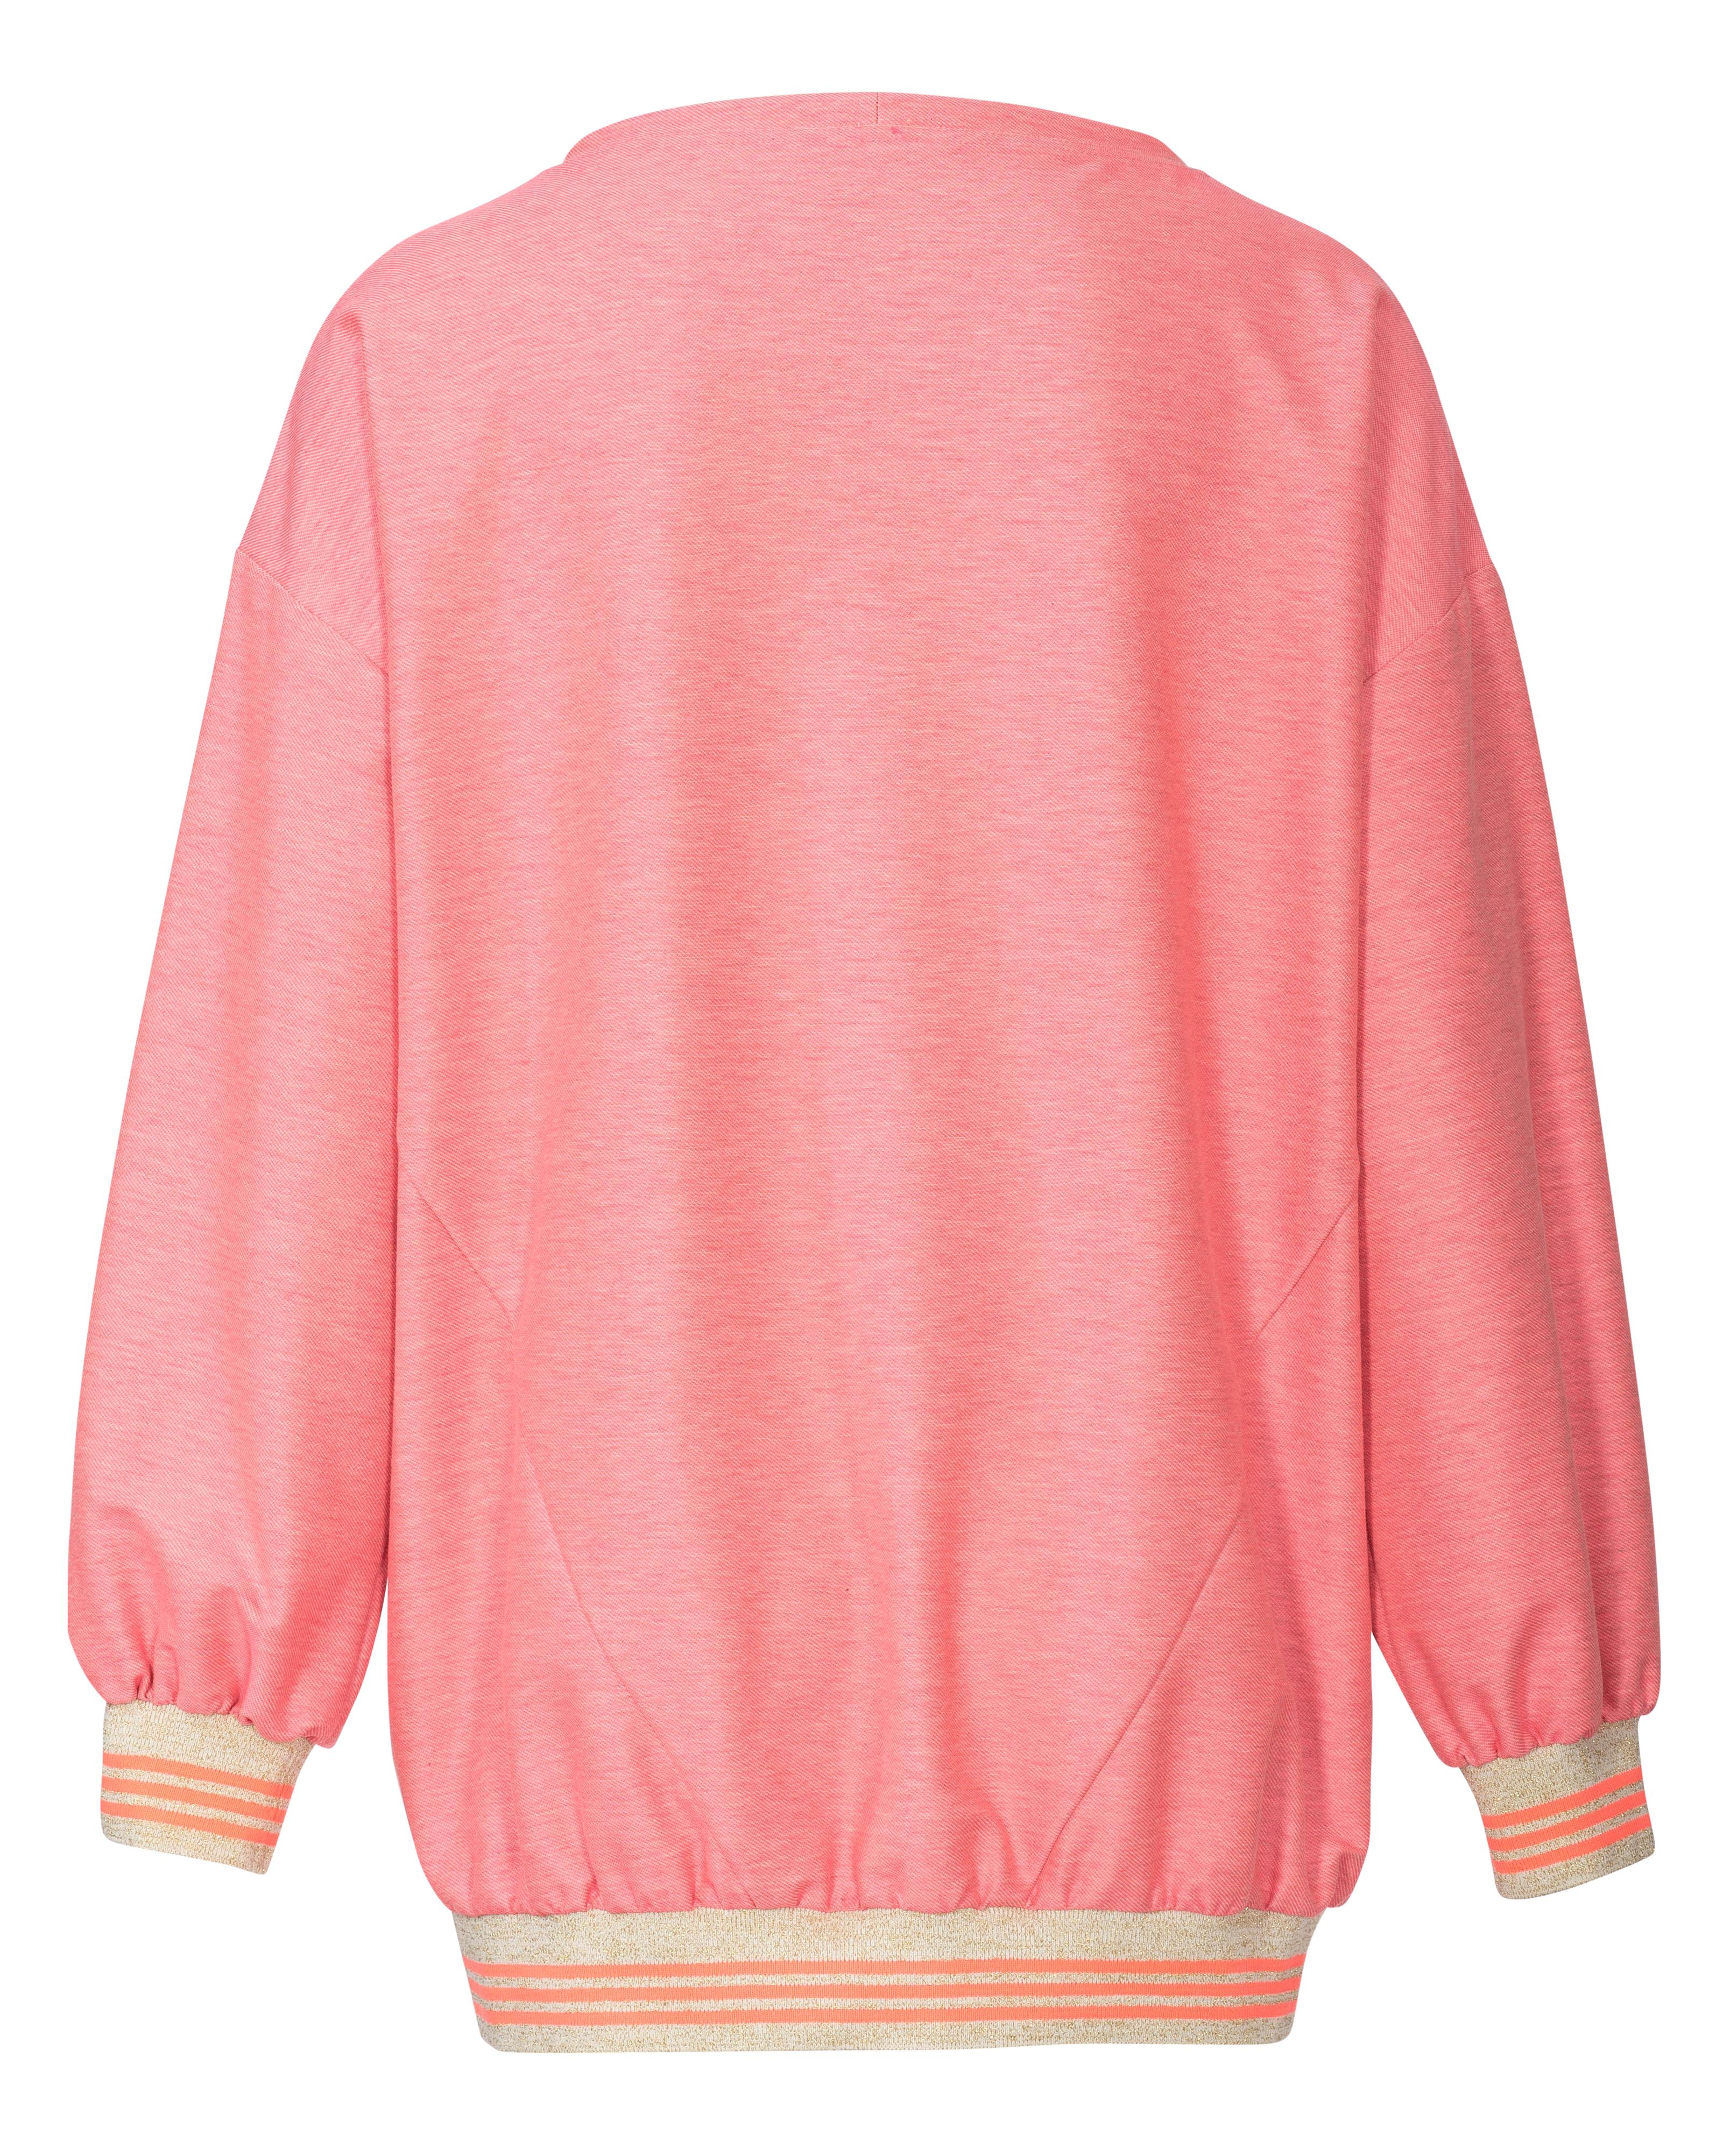 Burda B6203 Sweatshirt Sewing Pattern